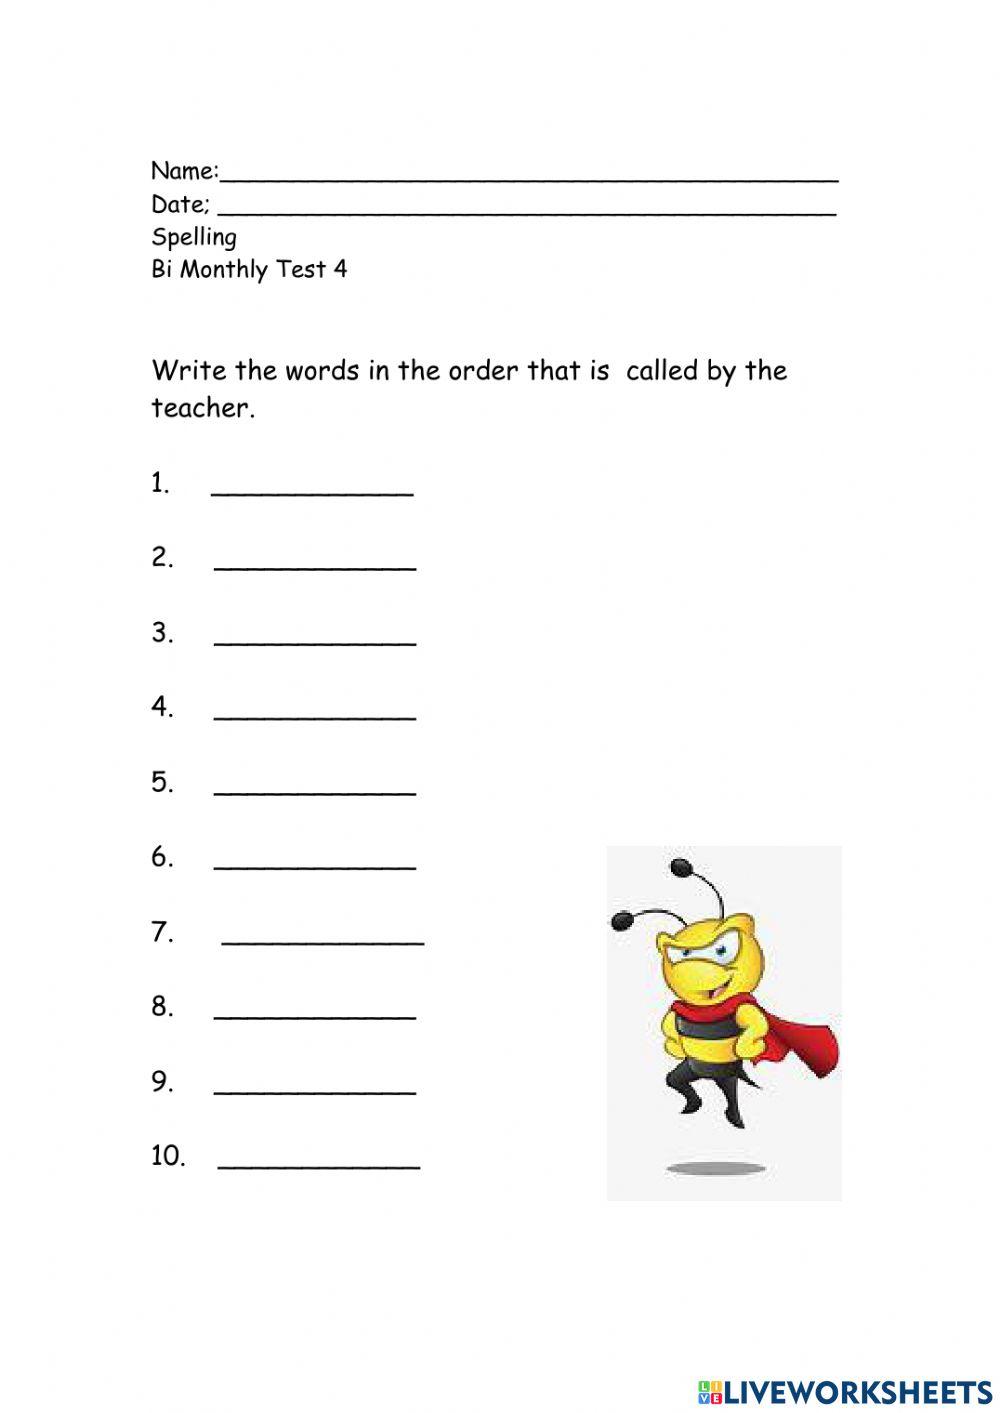 Bi-Monthly Spelling Test 4